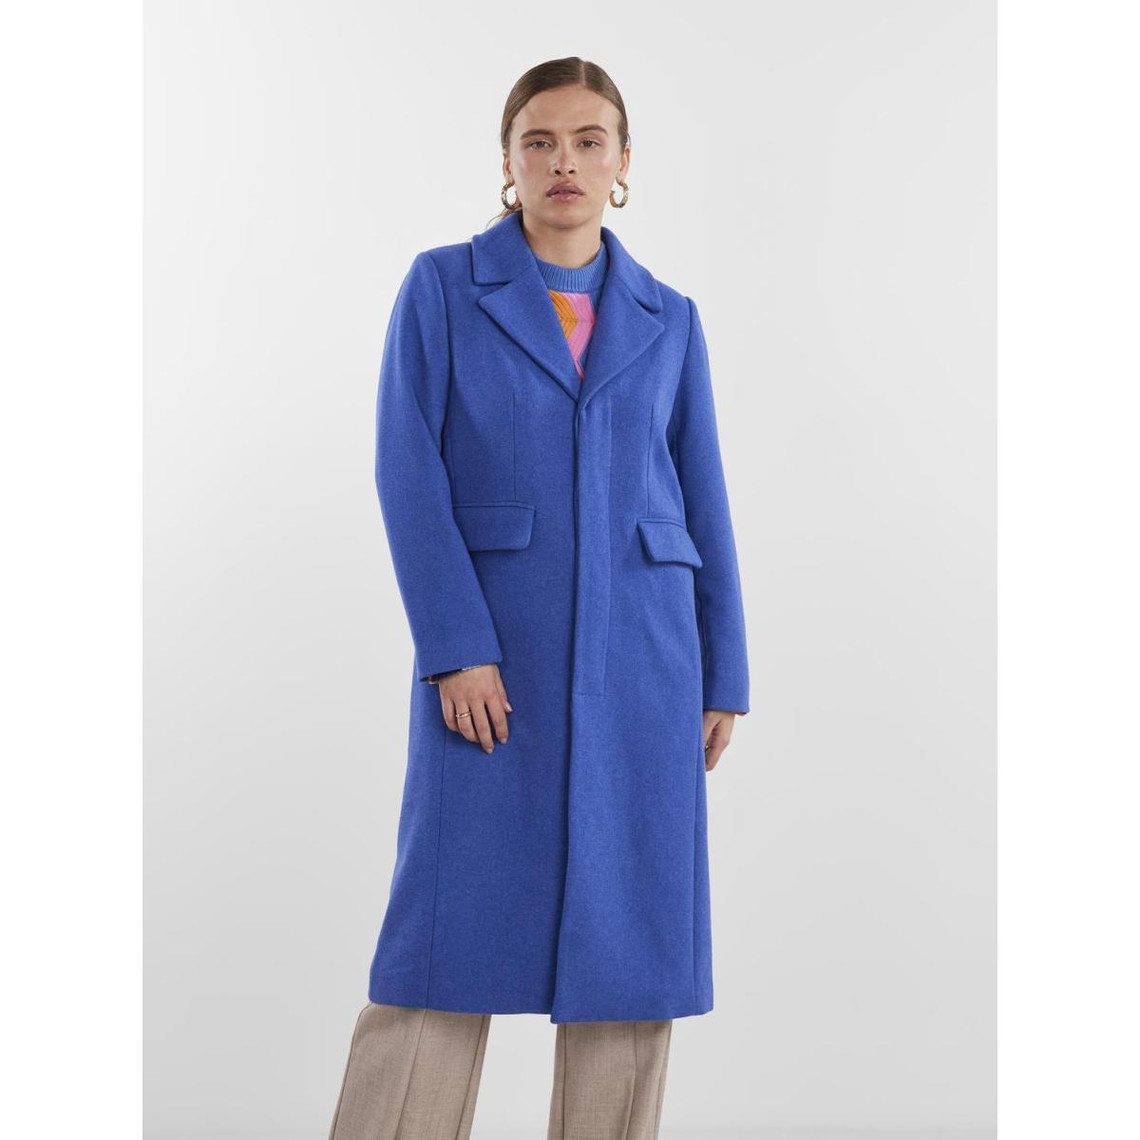 Manteau col italien bleu